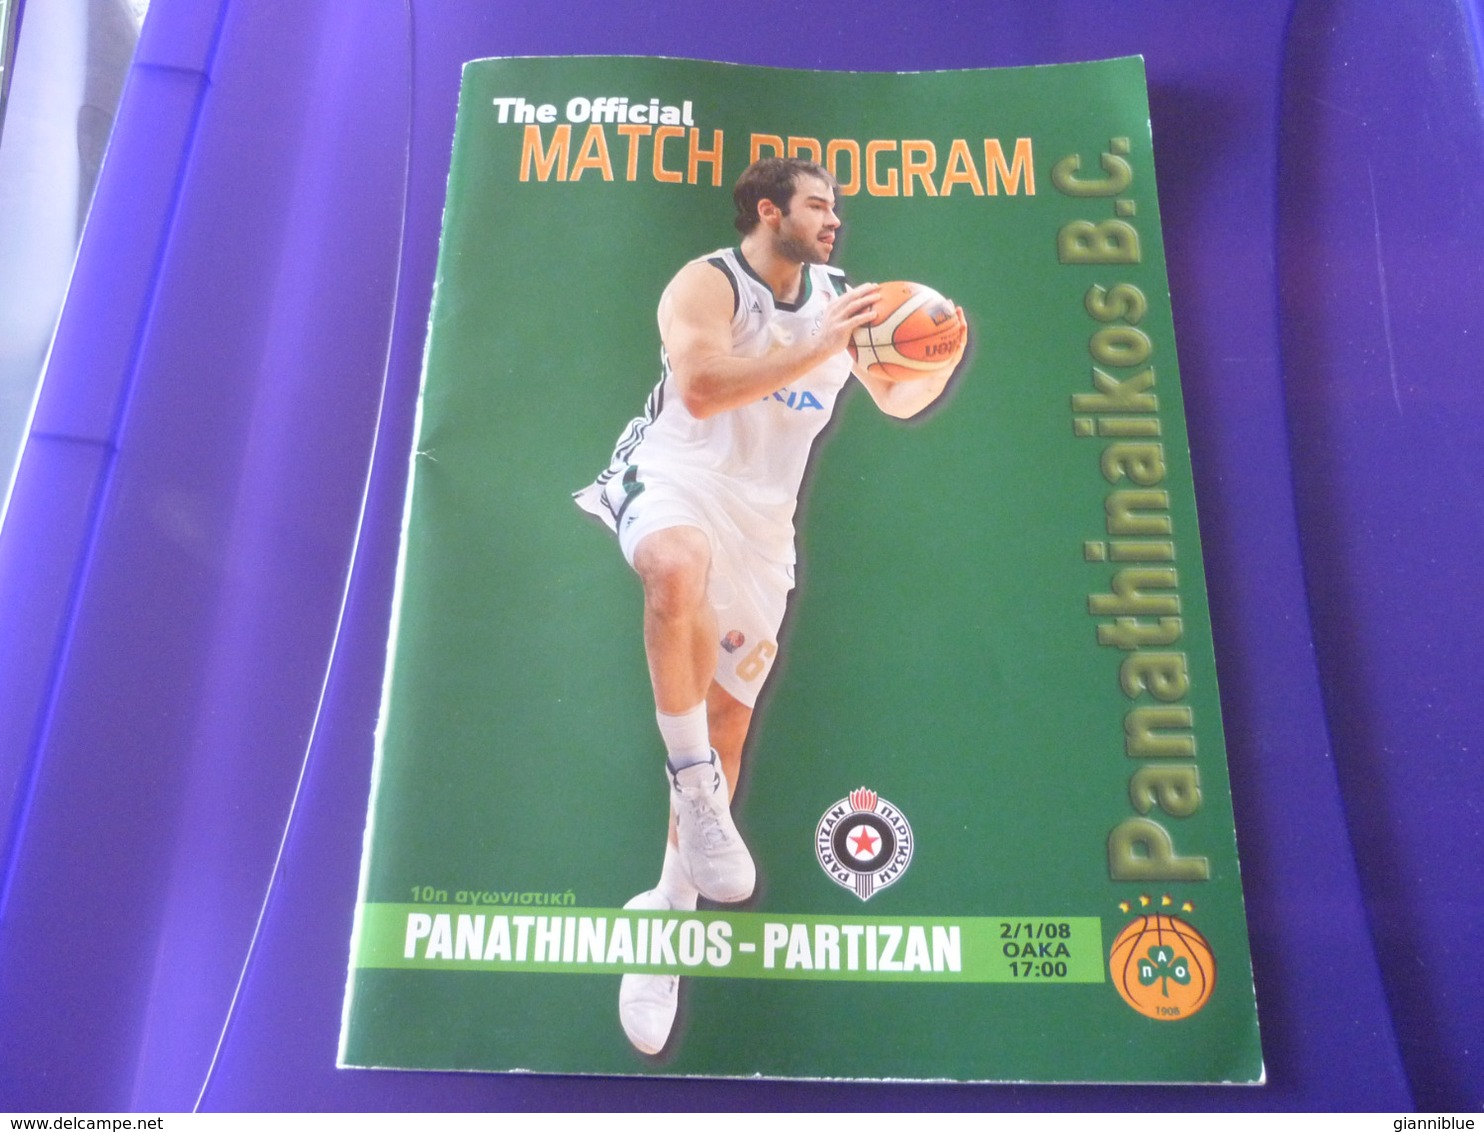 Panathinaikos-Partizan Euroleague Basketball Official Match Program Programme 02/01/2008 Spanoulis - Habillement, Souvenirs & Autres